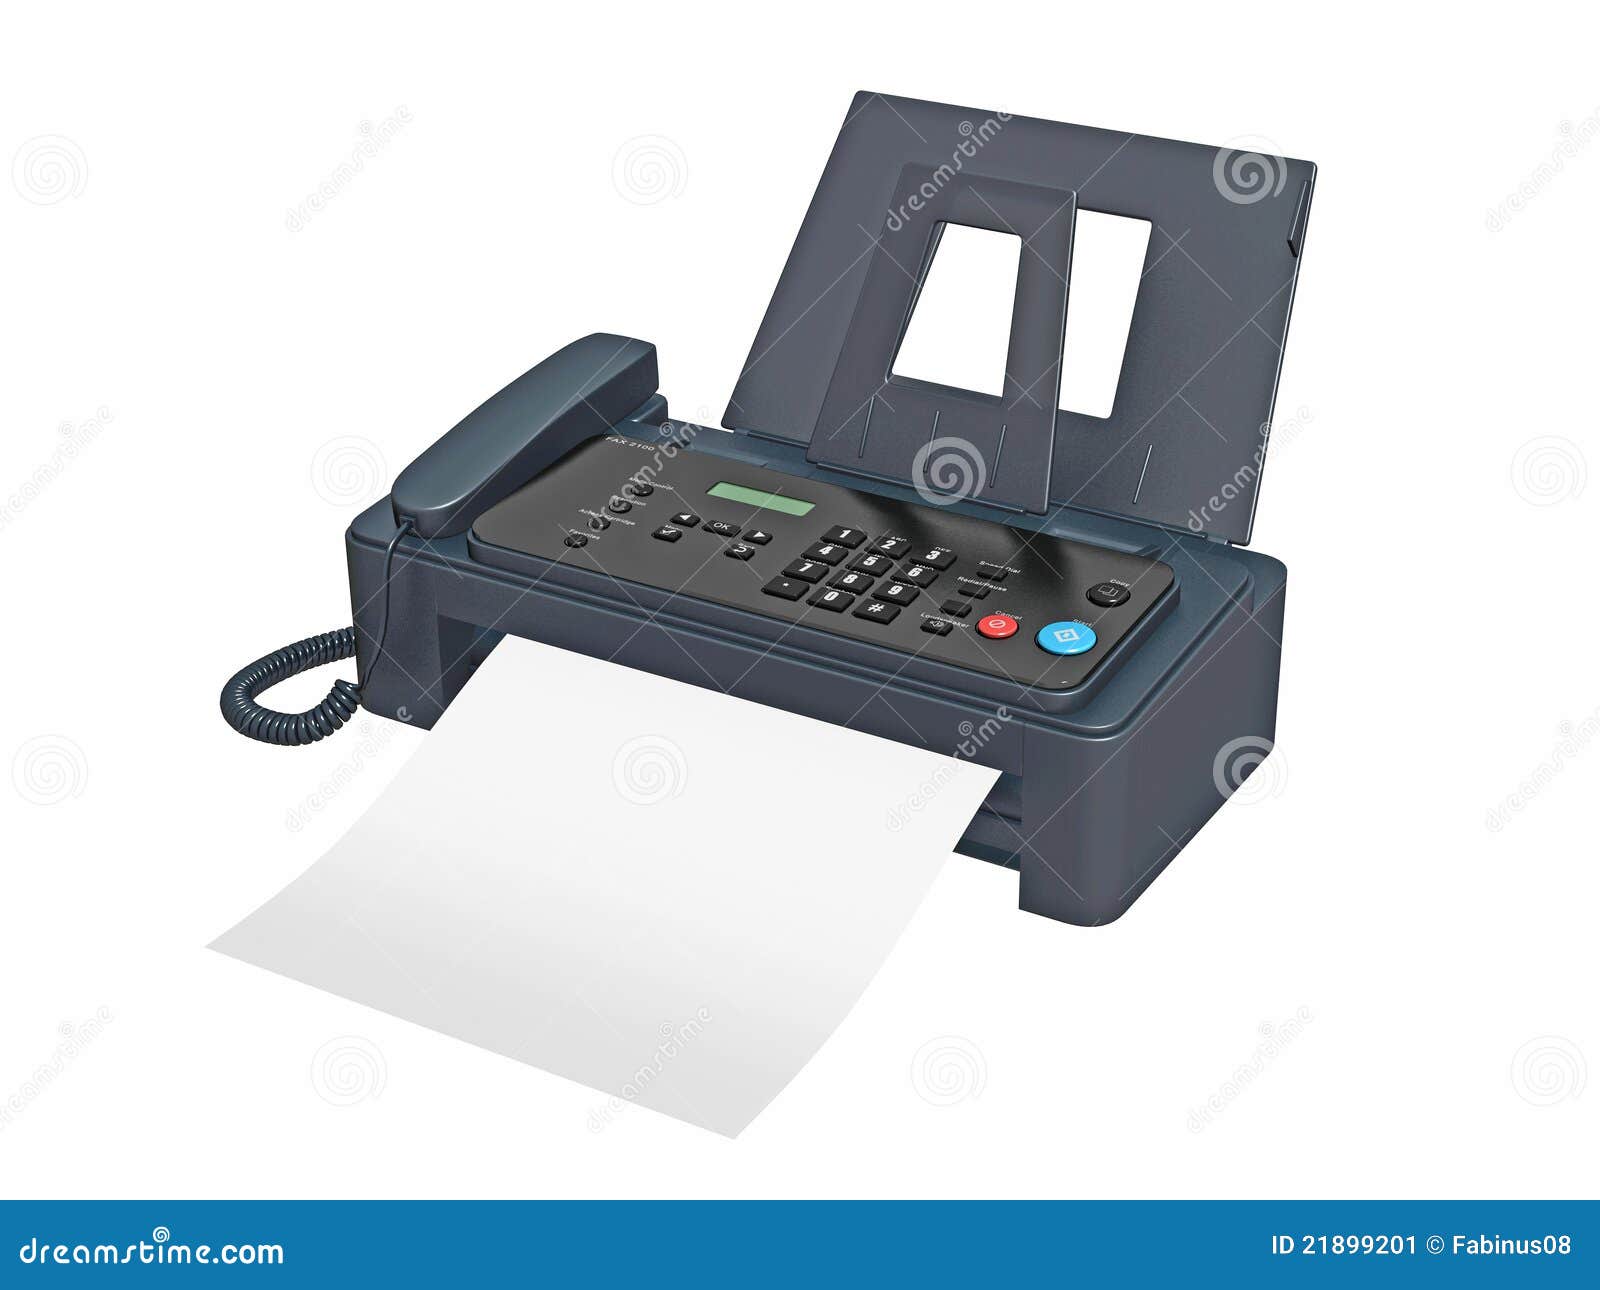 fax-machine-21899201.jpg